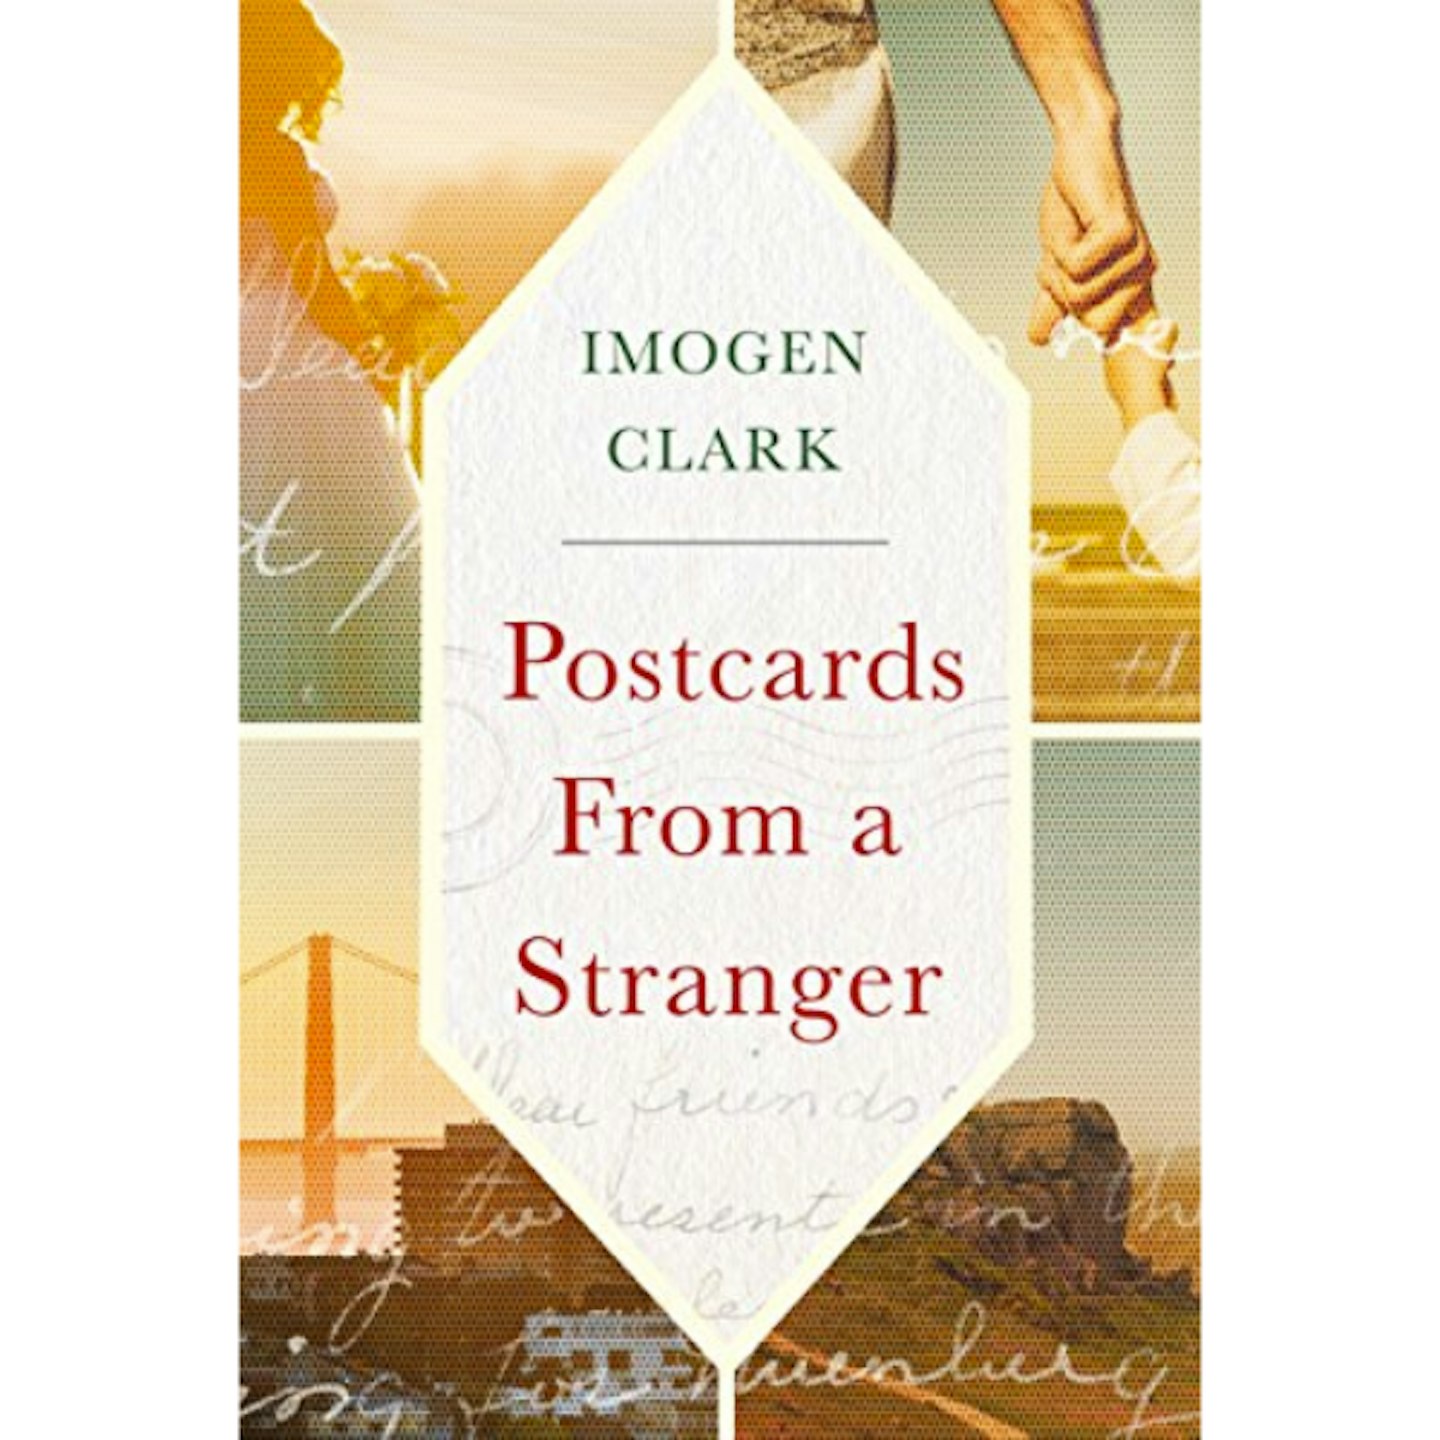 Postcards From a Stranger by Imogen Clark